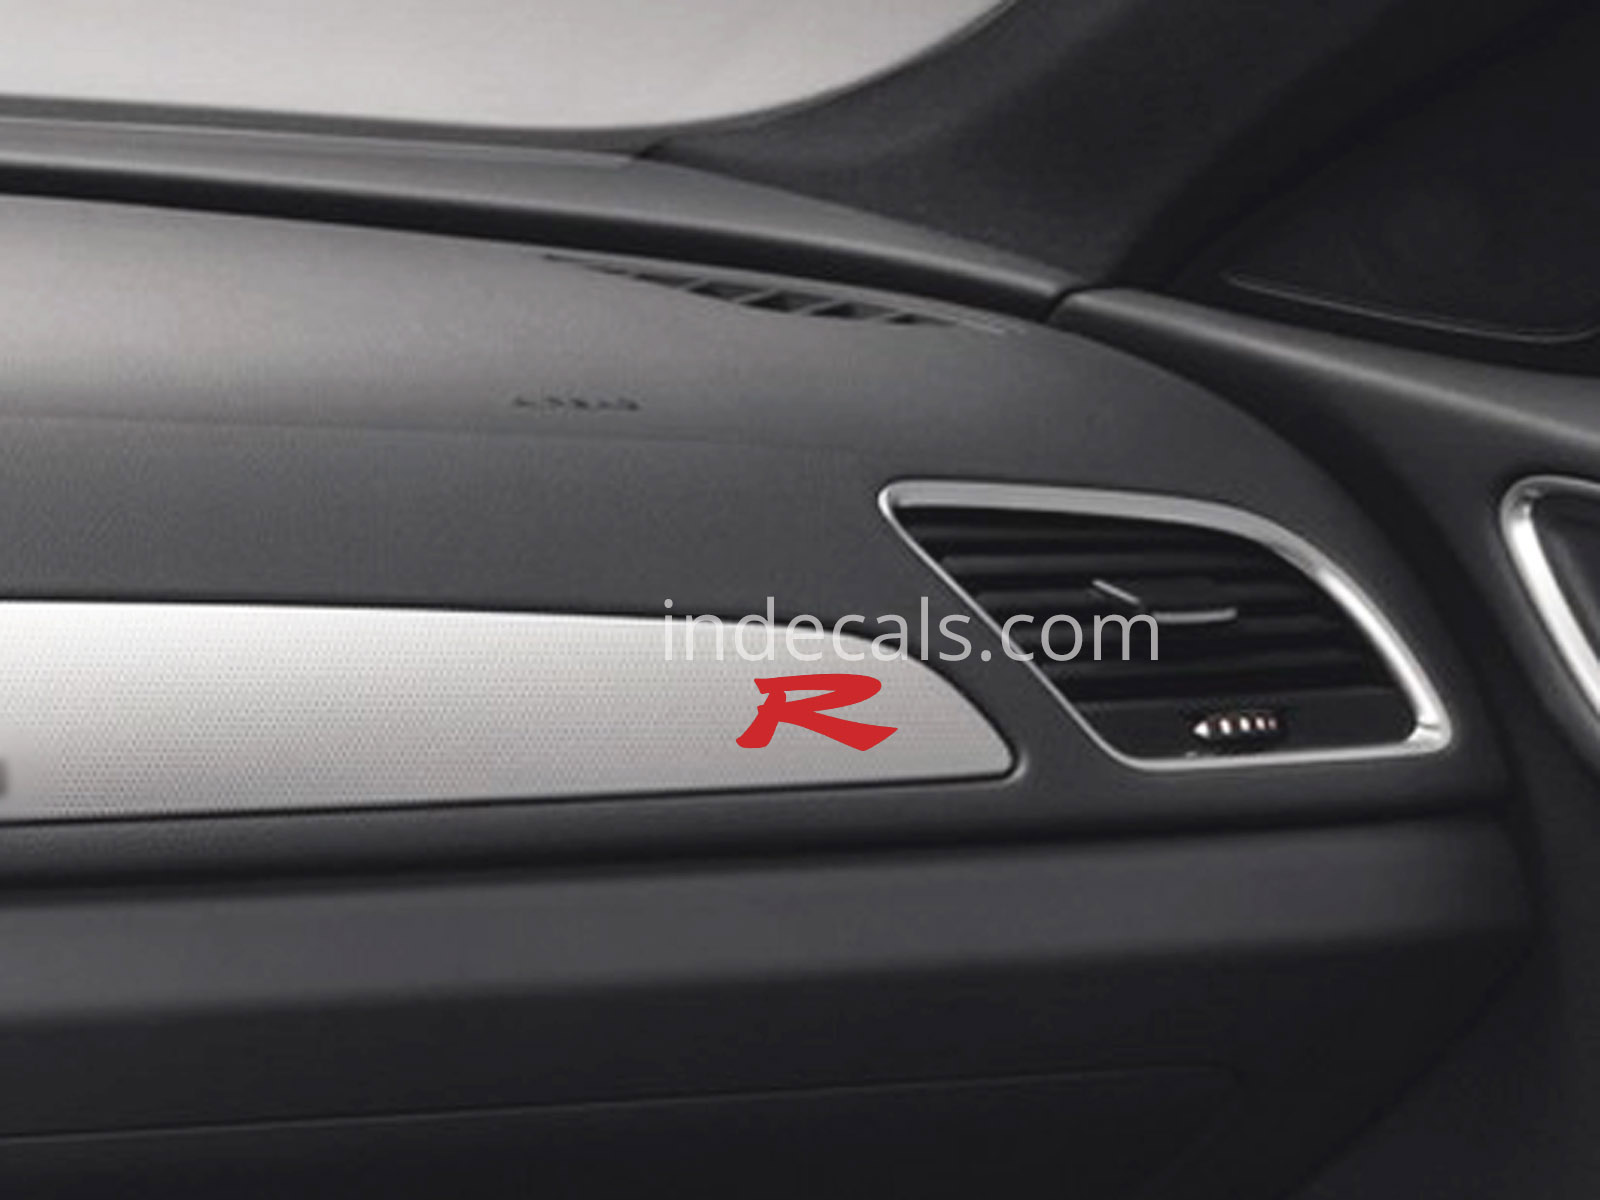 3 x Honda Type R Stickers for Dash Trim - Red